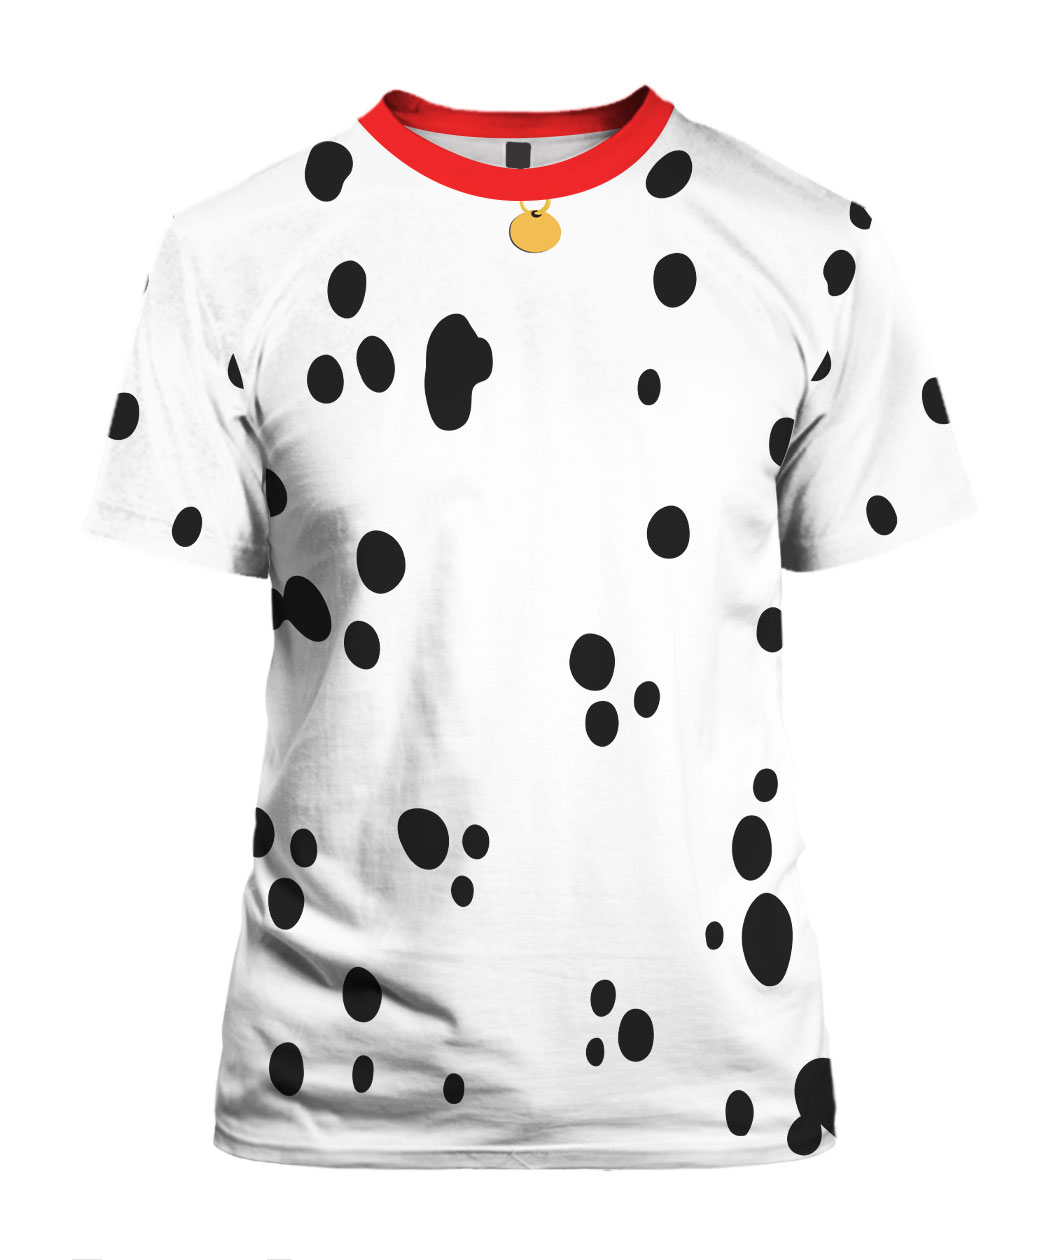 Dalmatian Print T Shirt Animal Dalmatian Dog Print Shirt Dalmation Shirt  Dalmatian Costume Dalmation Party T Shirt Halloween Dog Costume 